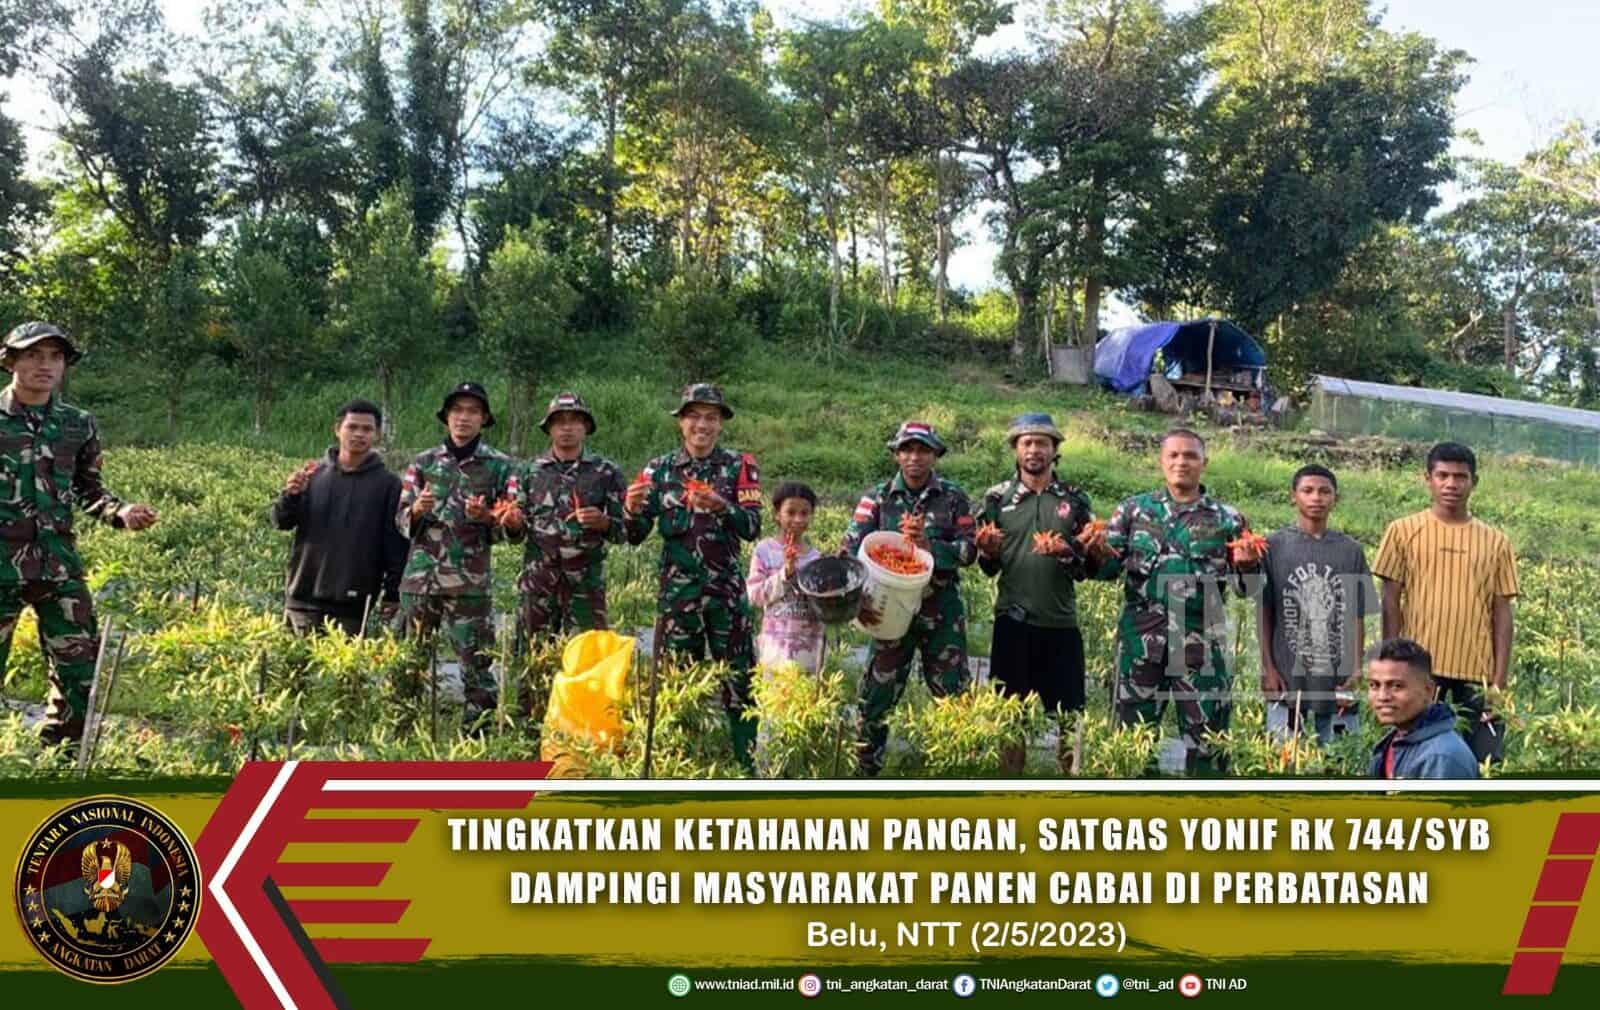 Tingkatkan Ketahanan Pangan, Satgas Yonif RK 744/SYB Dampingi Masyarakat Panen Cabai di Perbatasan